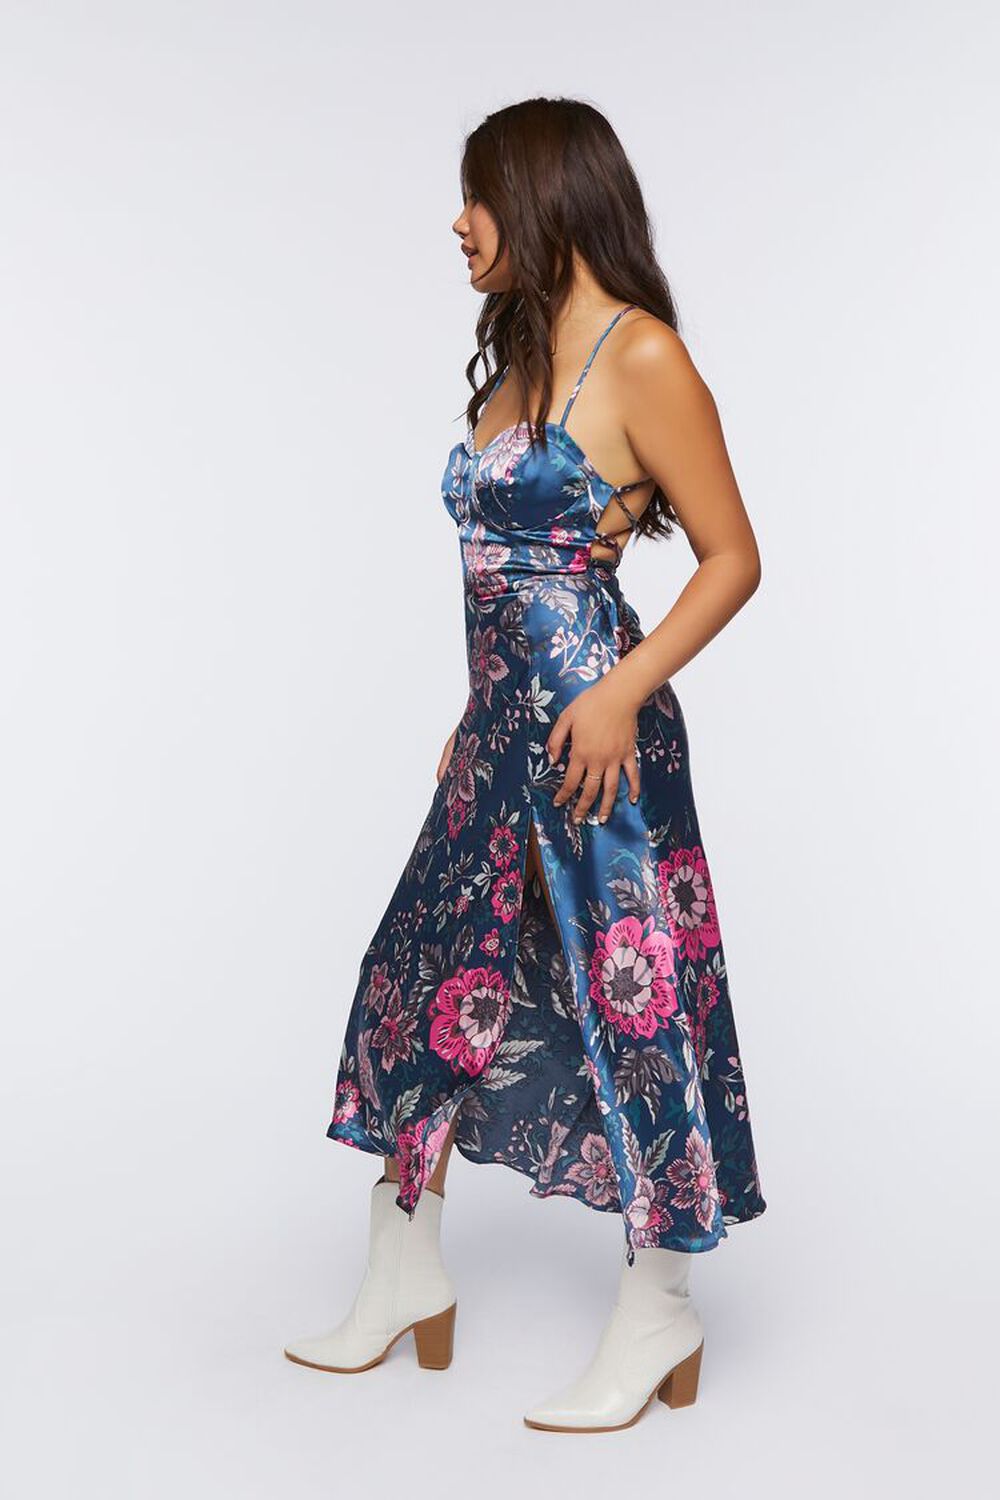 NAVY/MULTI Satin Bustier Floral Print Dress, image 2